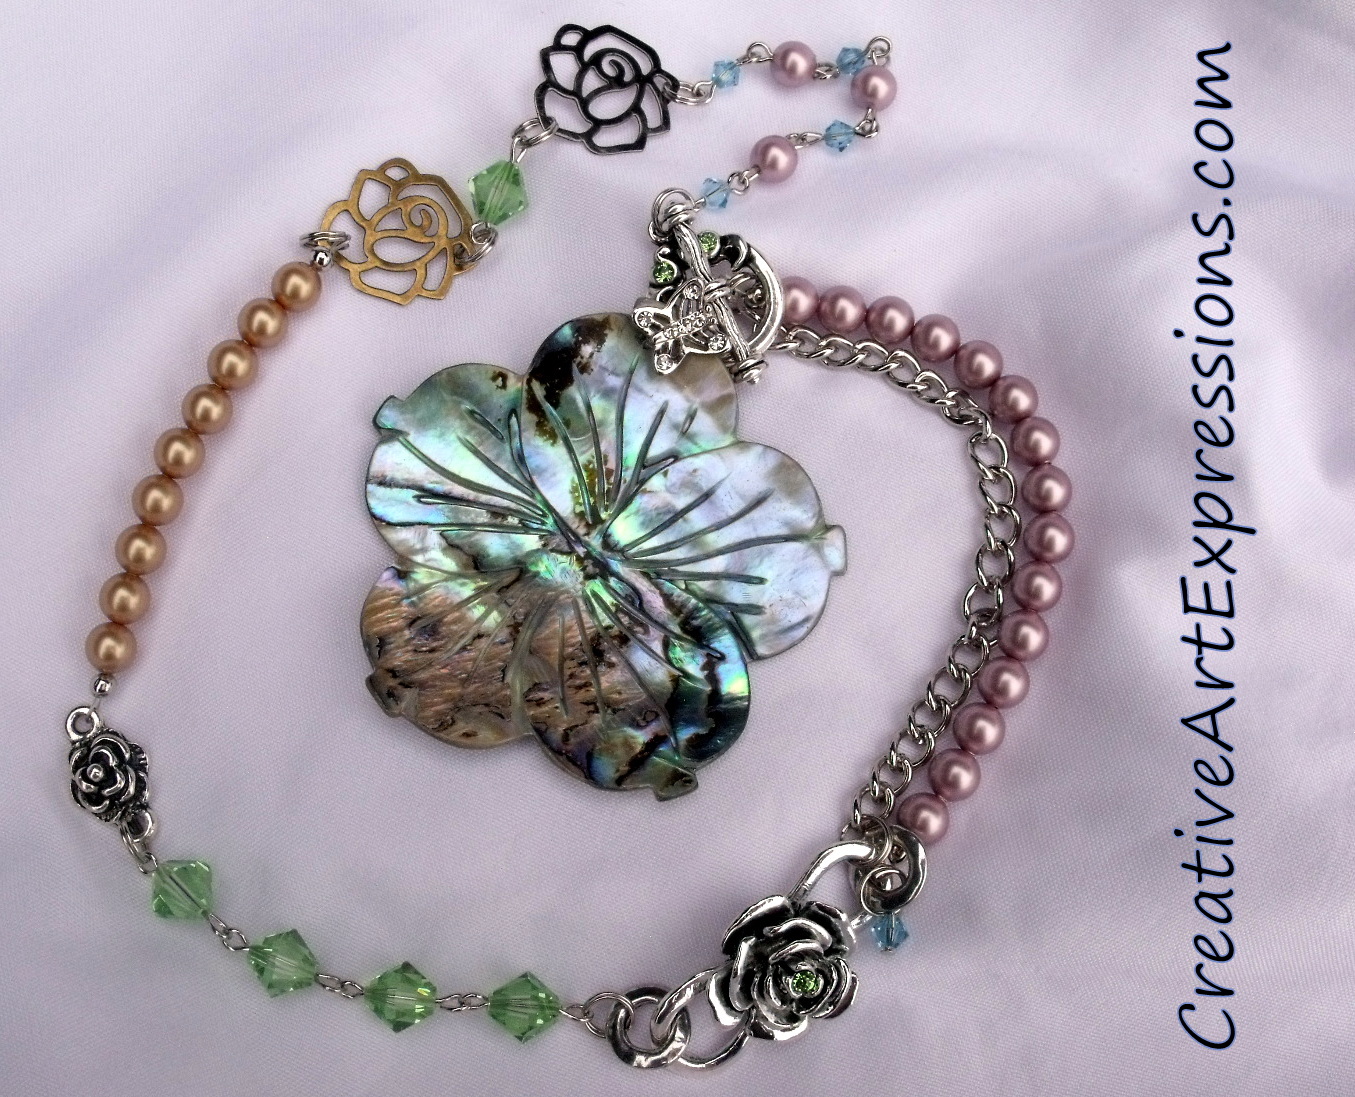 Creative Art Expressions Handmade Paua Shell Flower Pendant Necklace Jewelry Design